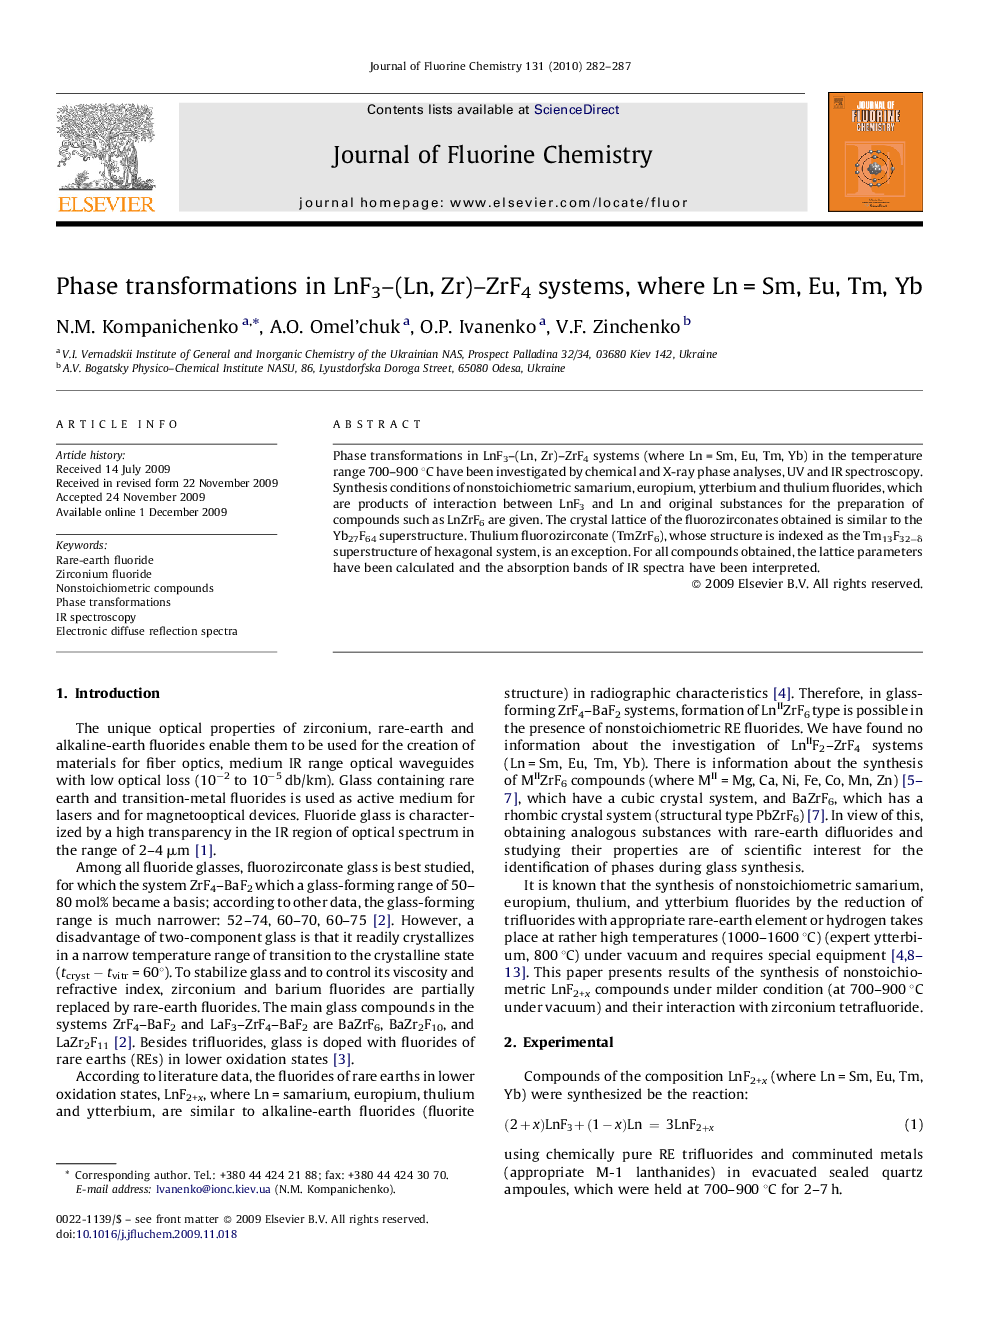 Phase transformations in LnF3–(Ln, Zr)–ZrF4 systems, where Ln = Sm, Eu, Tm, Yb